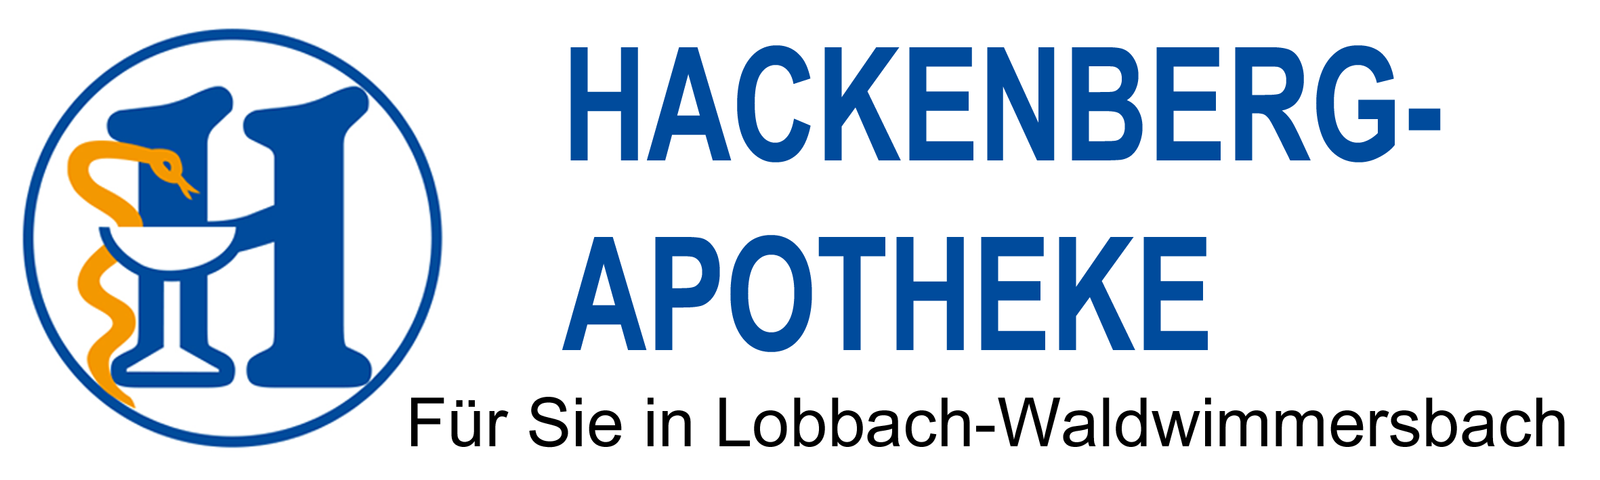 (c) Hackenberg-apotheke.de